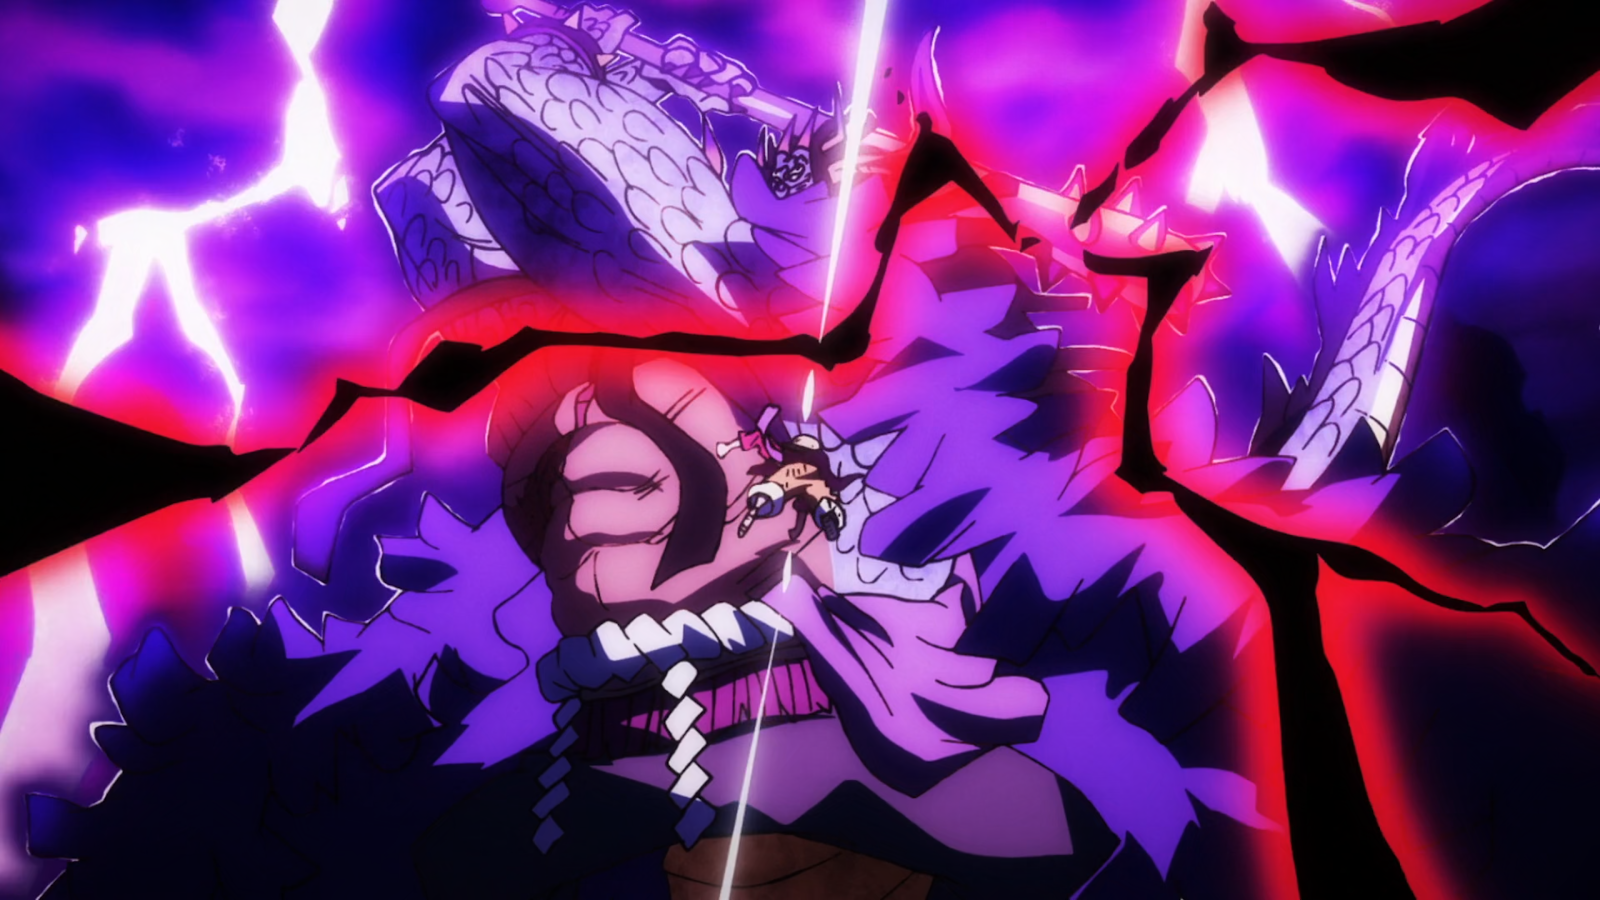 Blackjack Rants: One Piece Anime: Wano Arc, Episodes 1026-1028